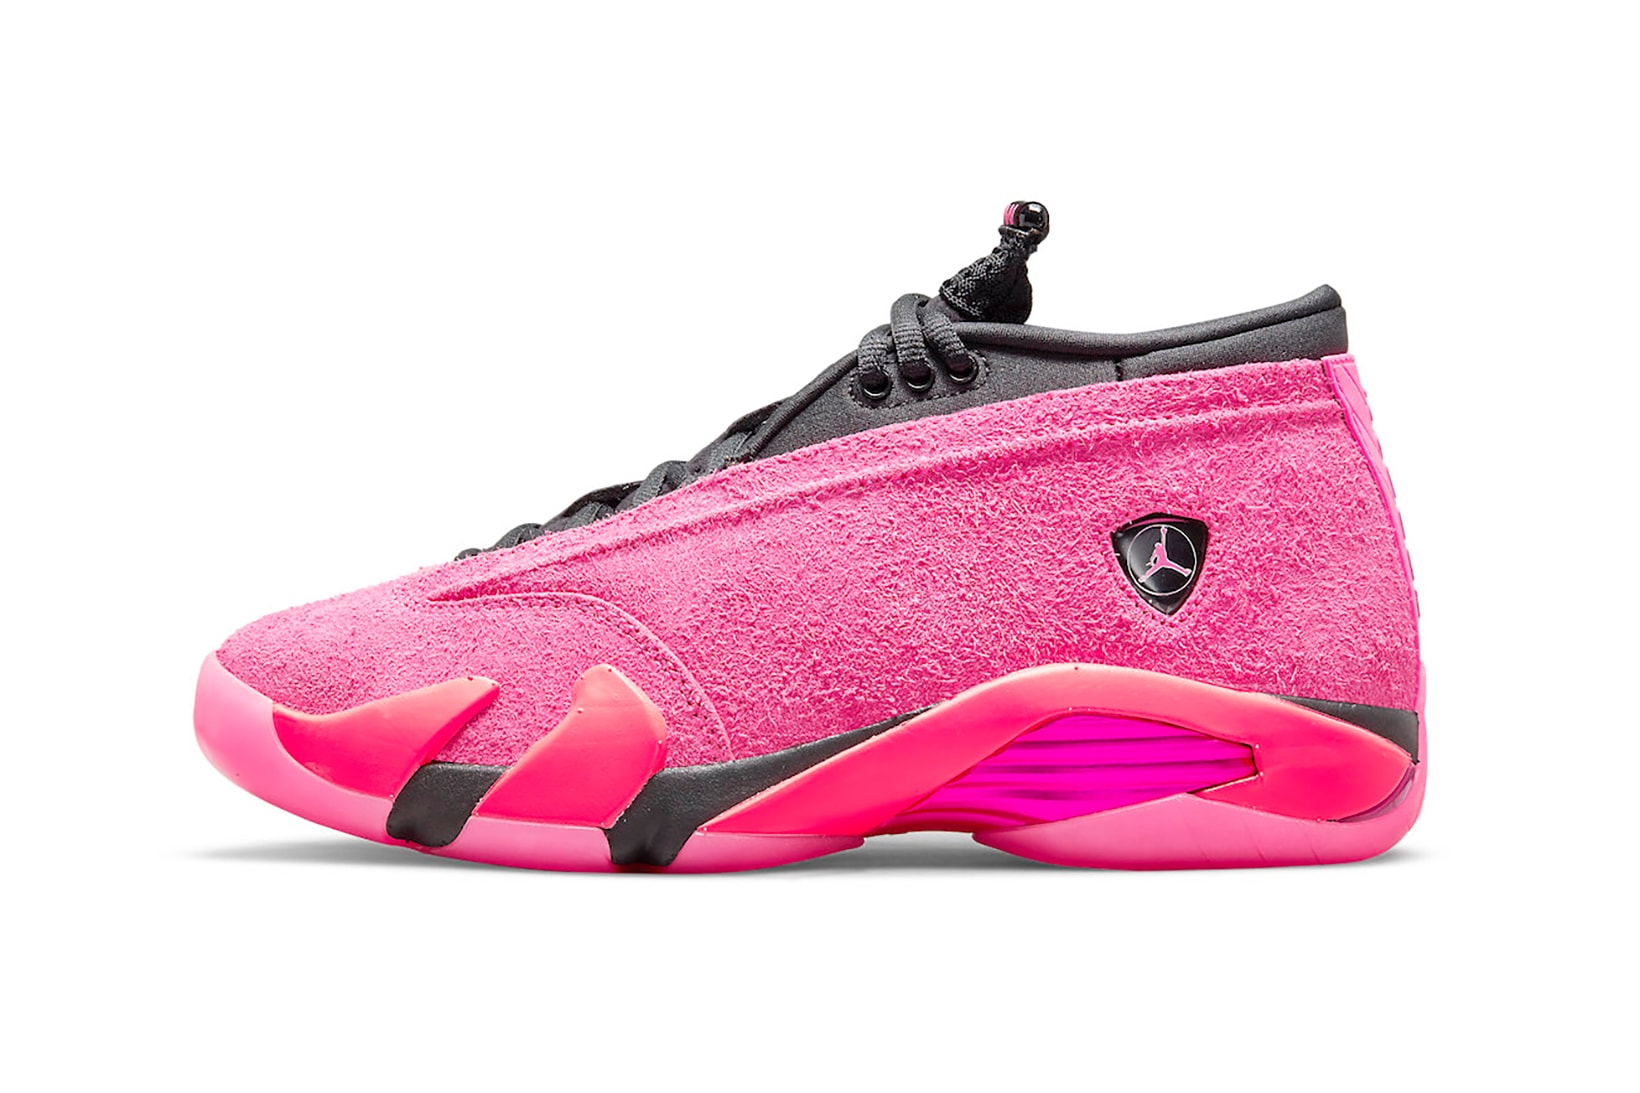 Nike Air Jordan 14 AJ14 Low Shocking Pink Black Womens Sneakers Footwear Shoes Kicks